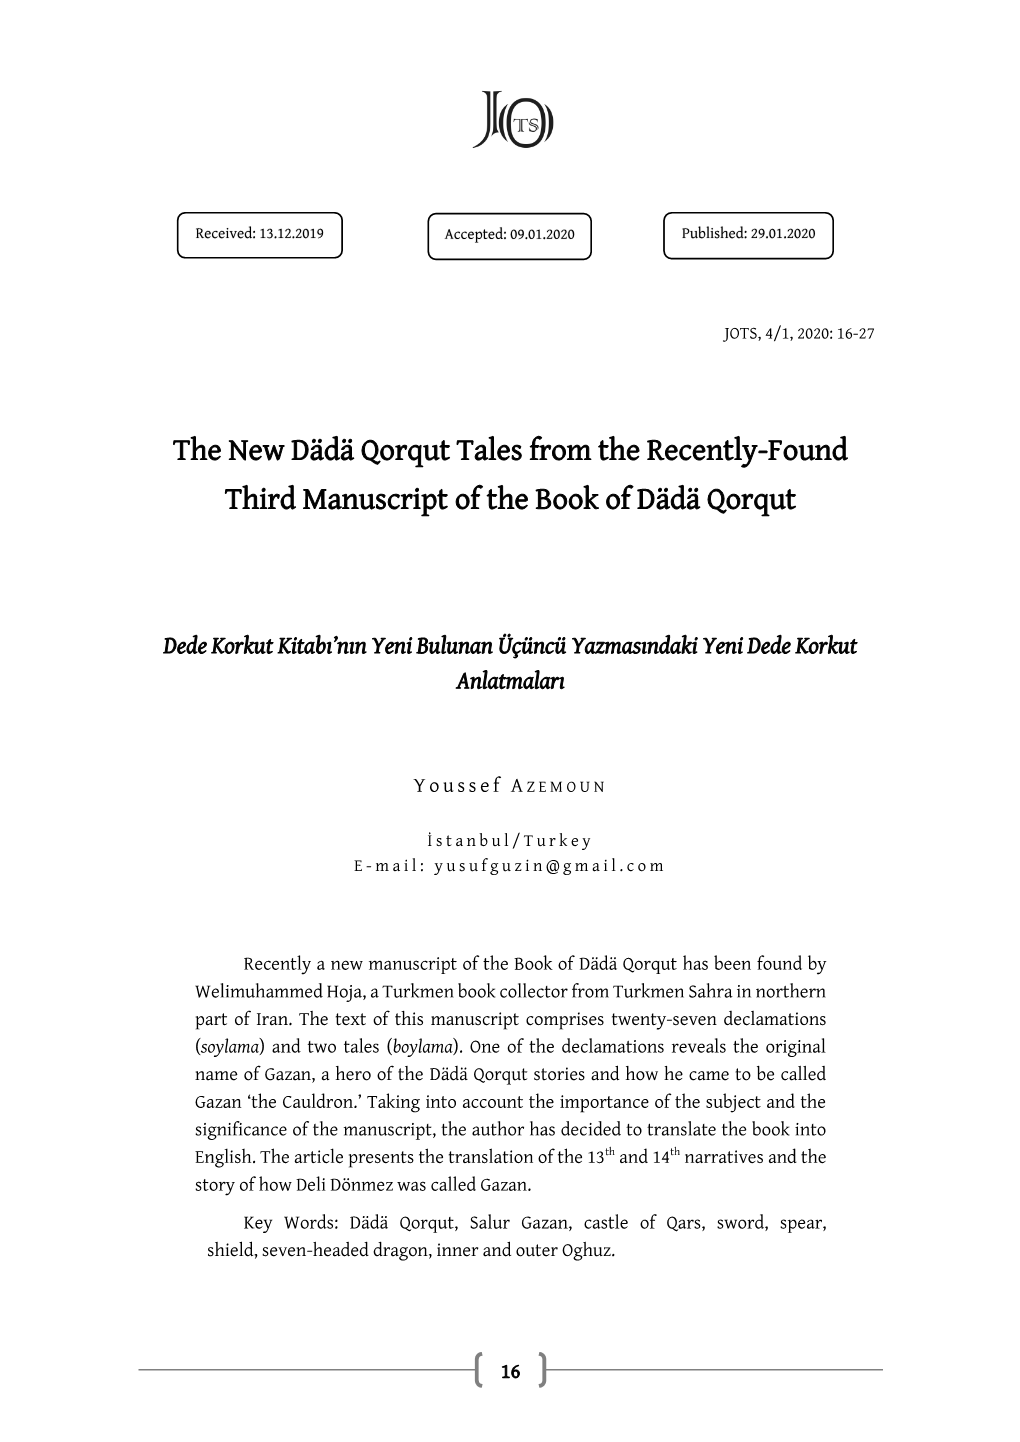 The New Dädä Qorqut Tales from the Recently-Found Third Manuscript of the Book of Dädä Qorqut